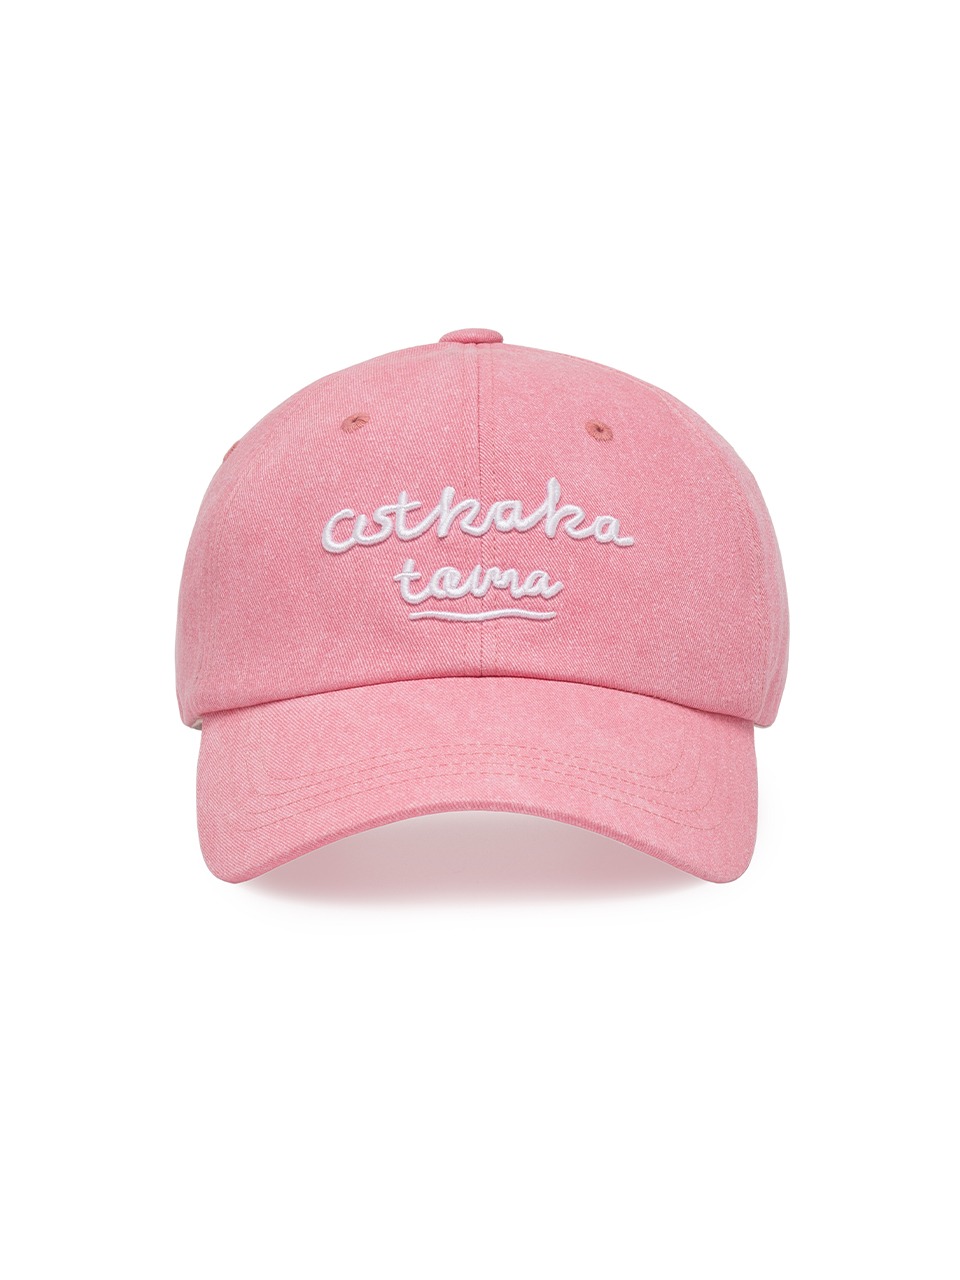 [OstkakaXToma] Logo Cap Pink